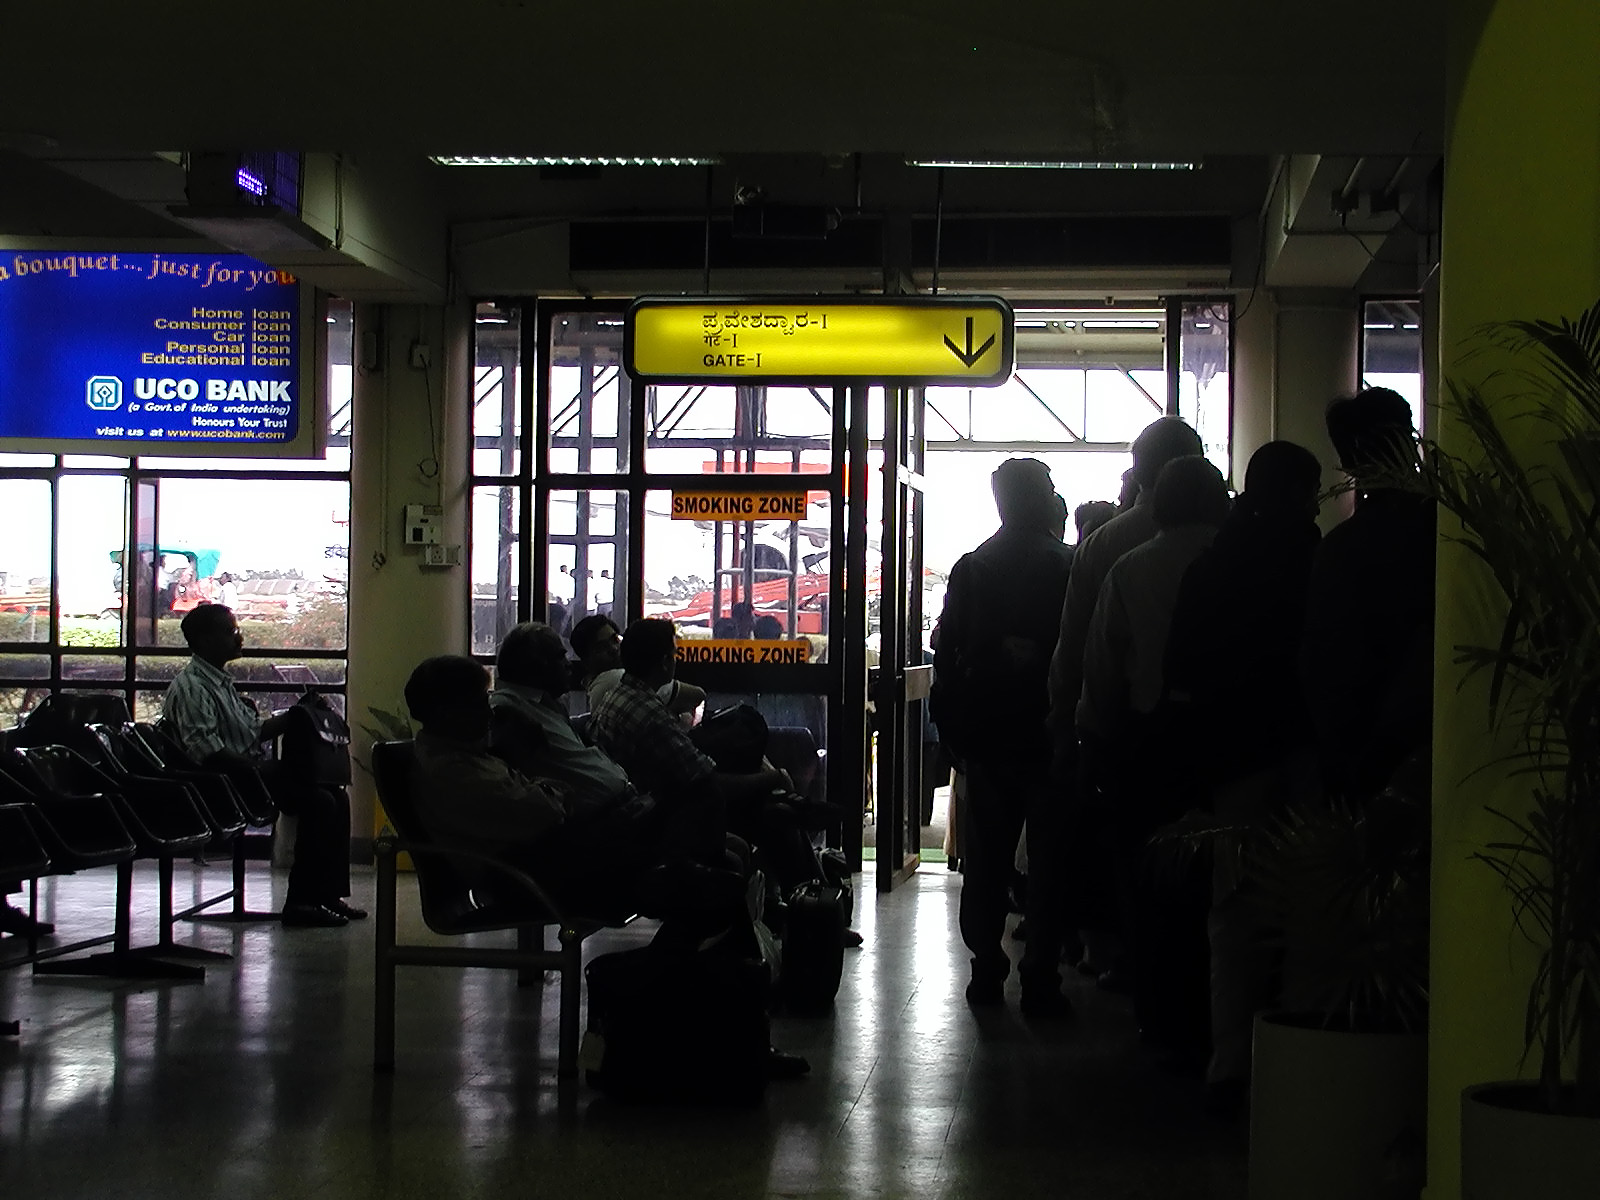 14-Jun-2001 16:33 - Bangalore - Queuing at the gate